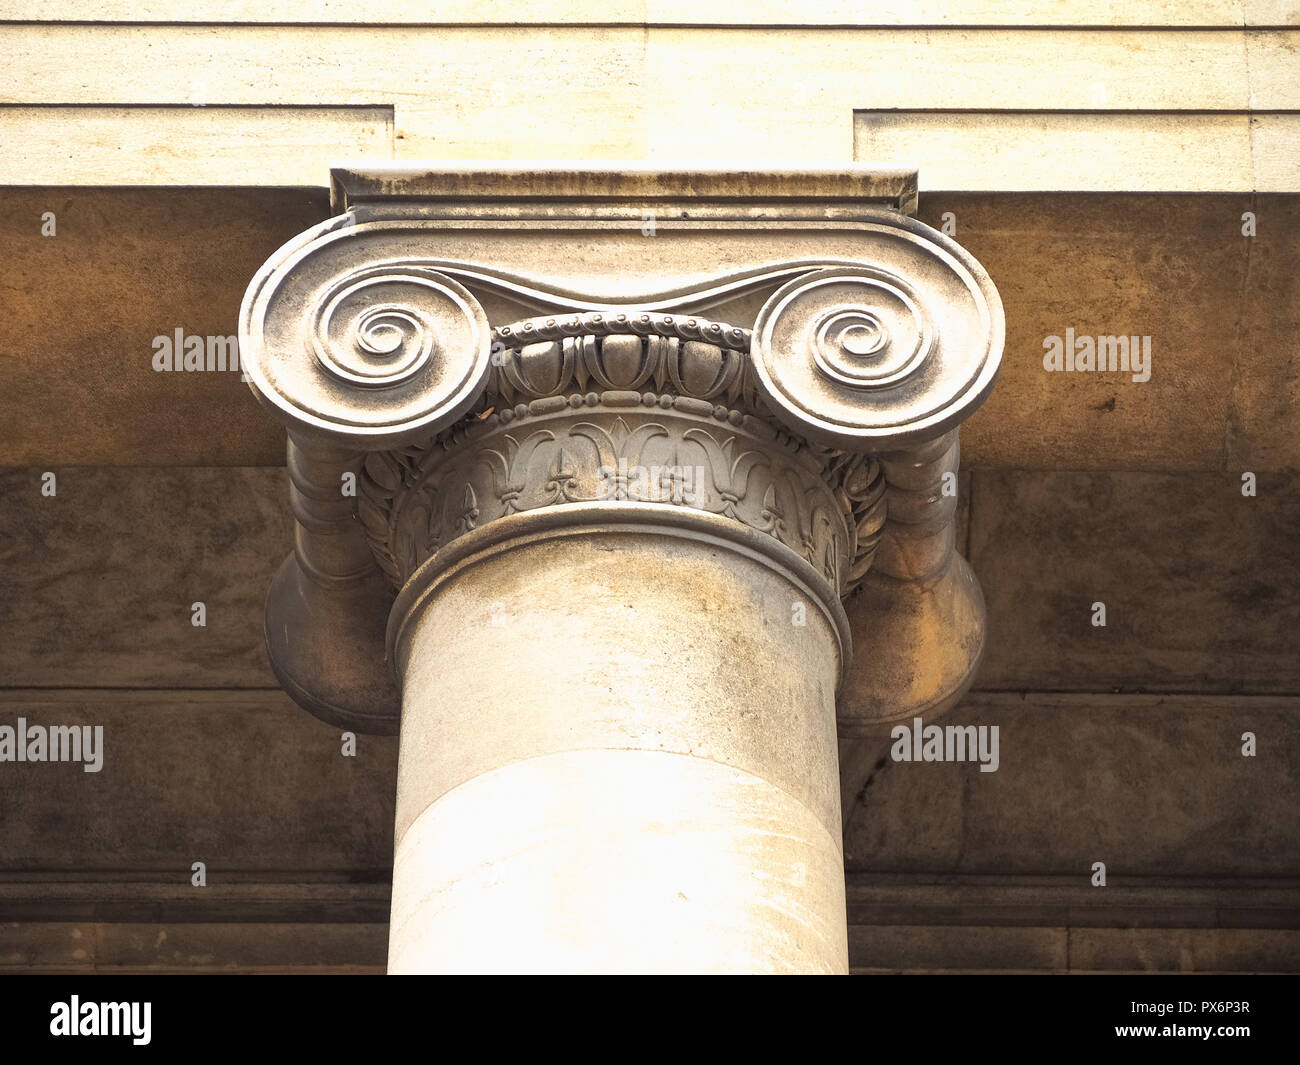 ionic capital (aka chapiter) of a column Stock Photo